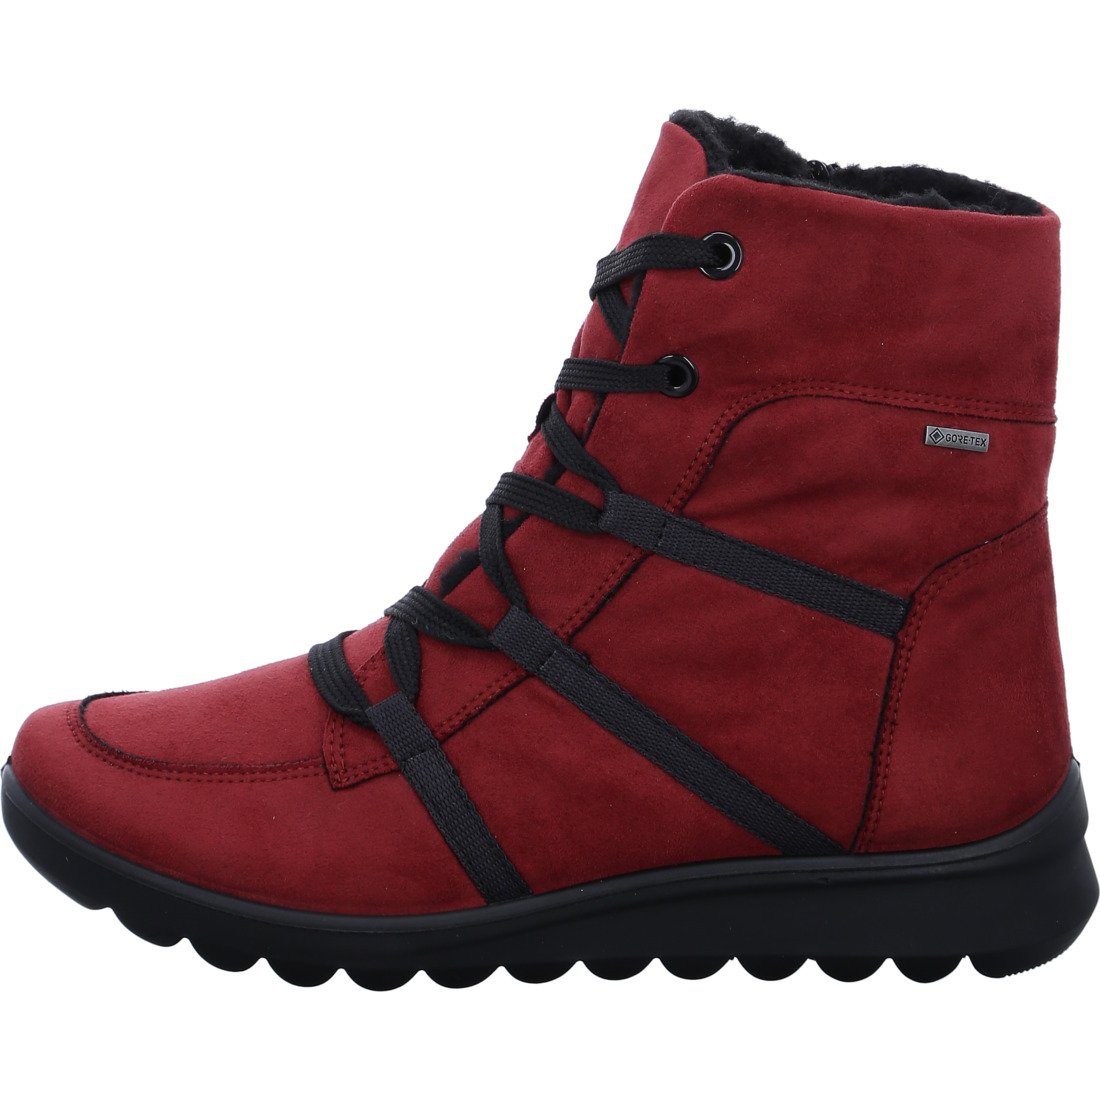 049634 Toronto Ara Damen rot Schuhe, Ara Stiefel Stiefel Textil -